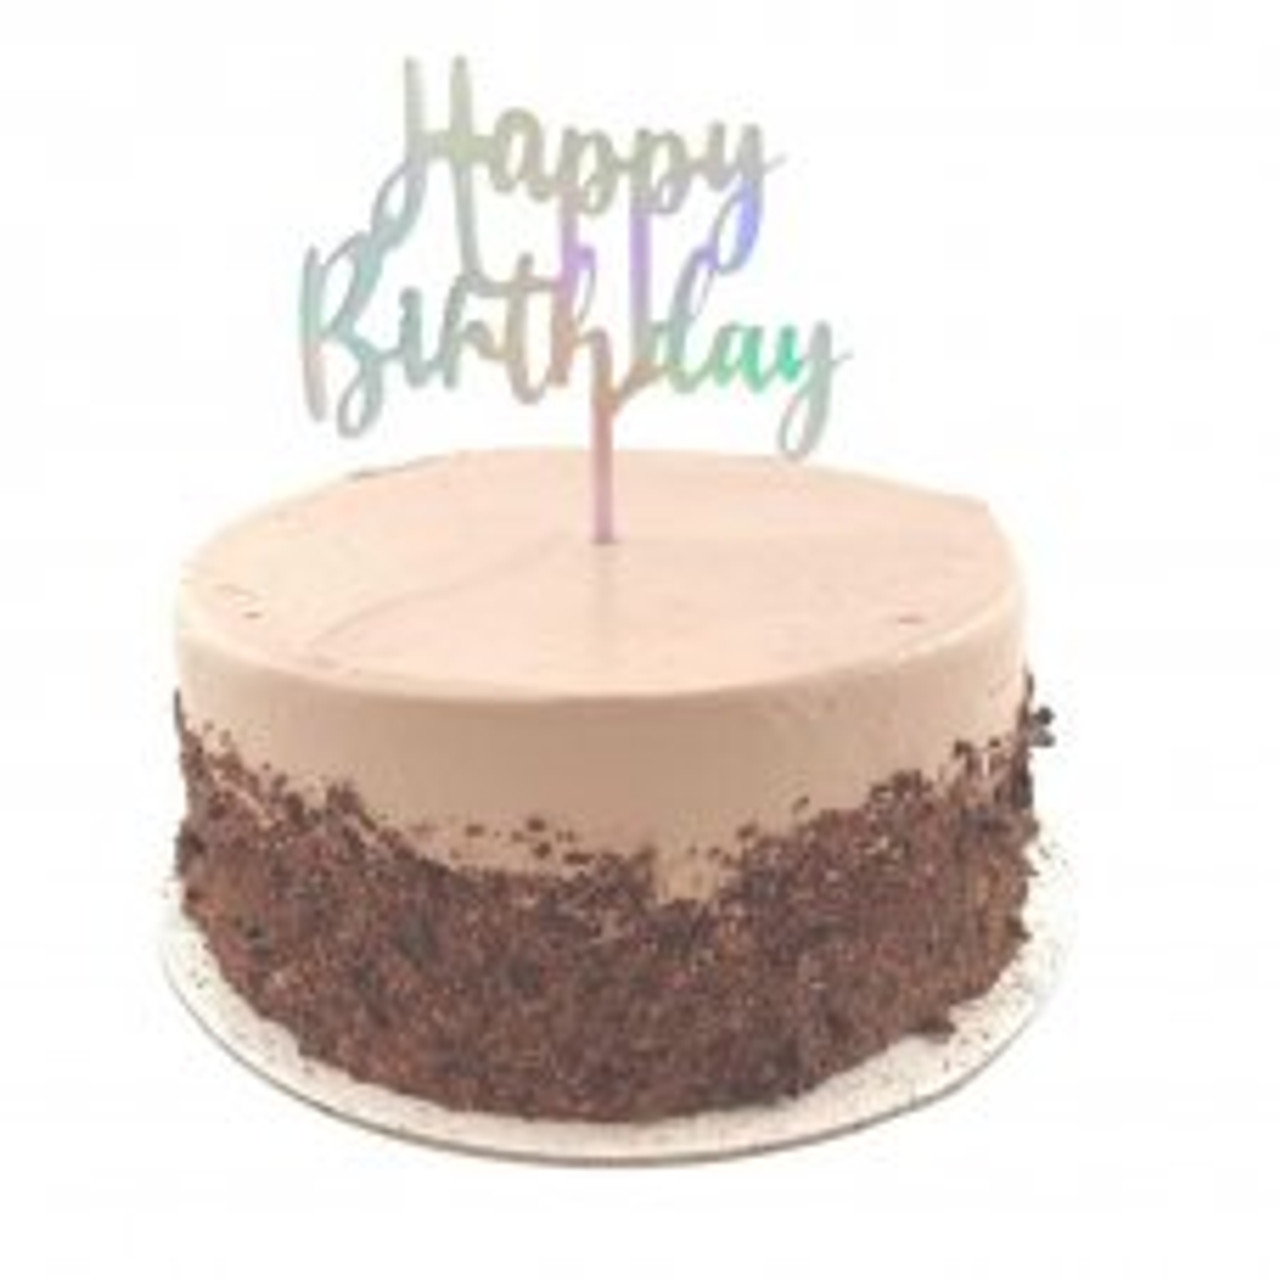 443013 CAKE TOPPER ACRYLIC HAPPY BIRTHDAY IRIDESCENT